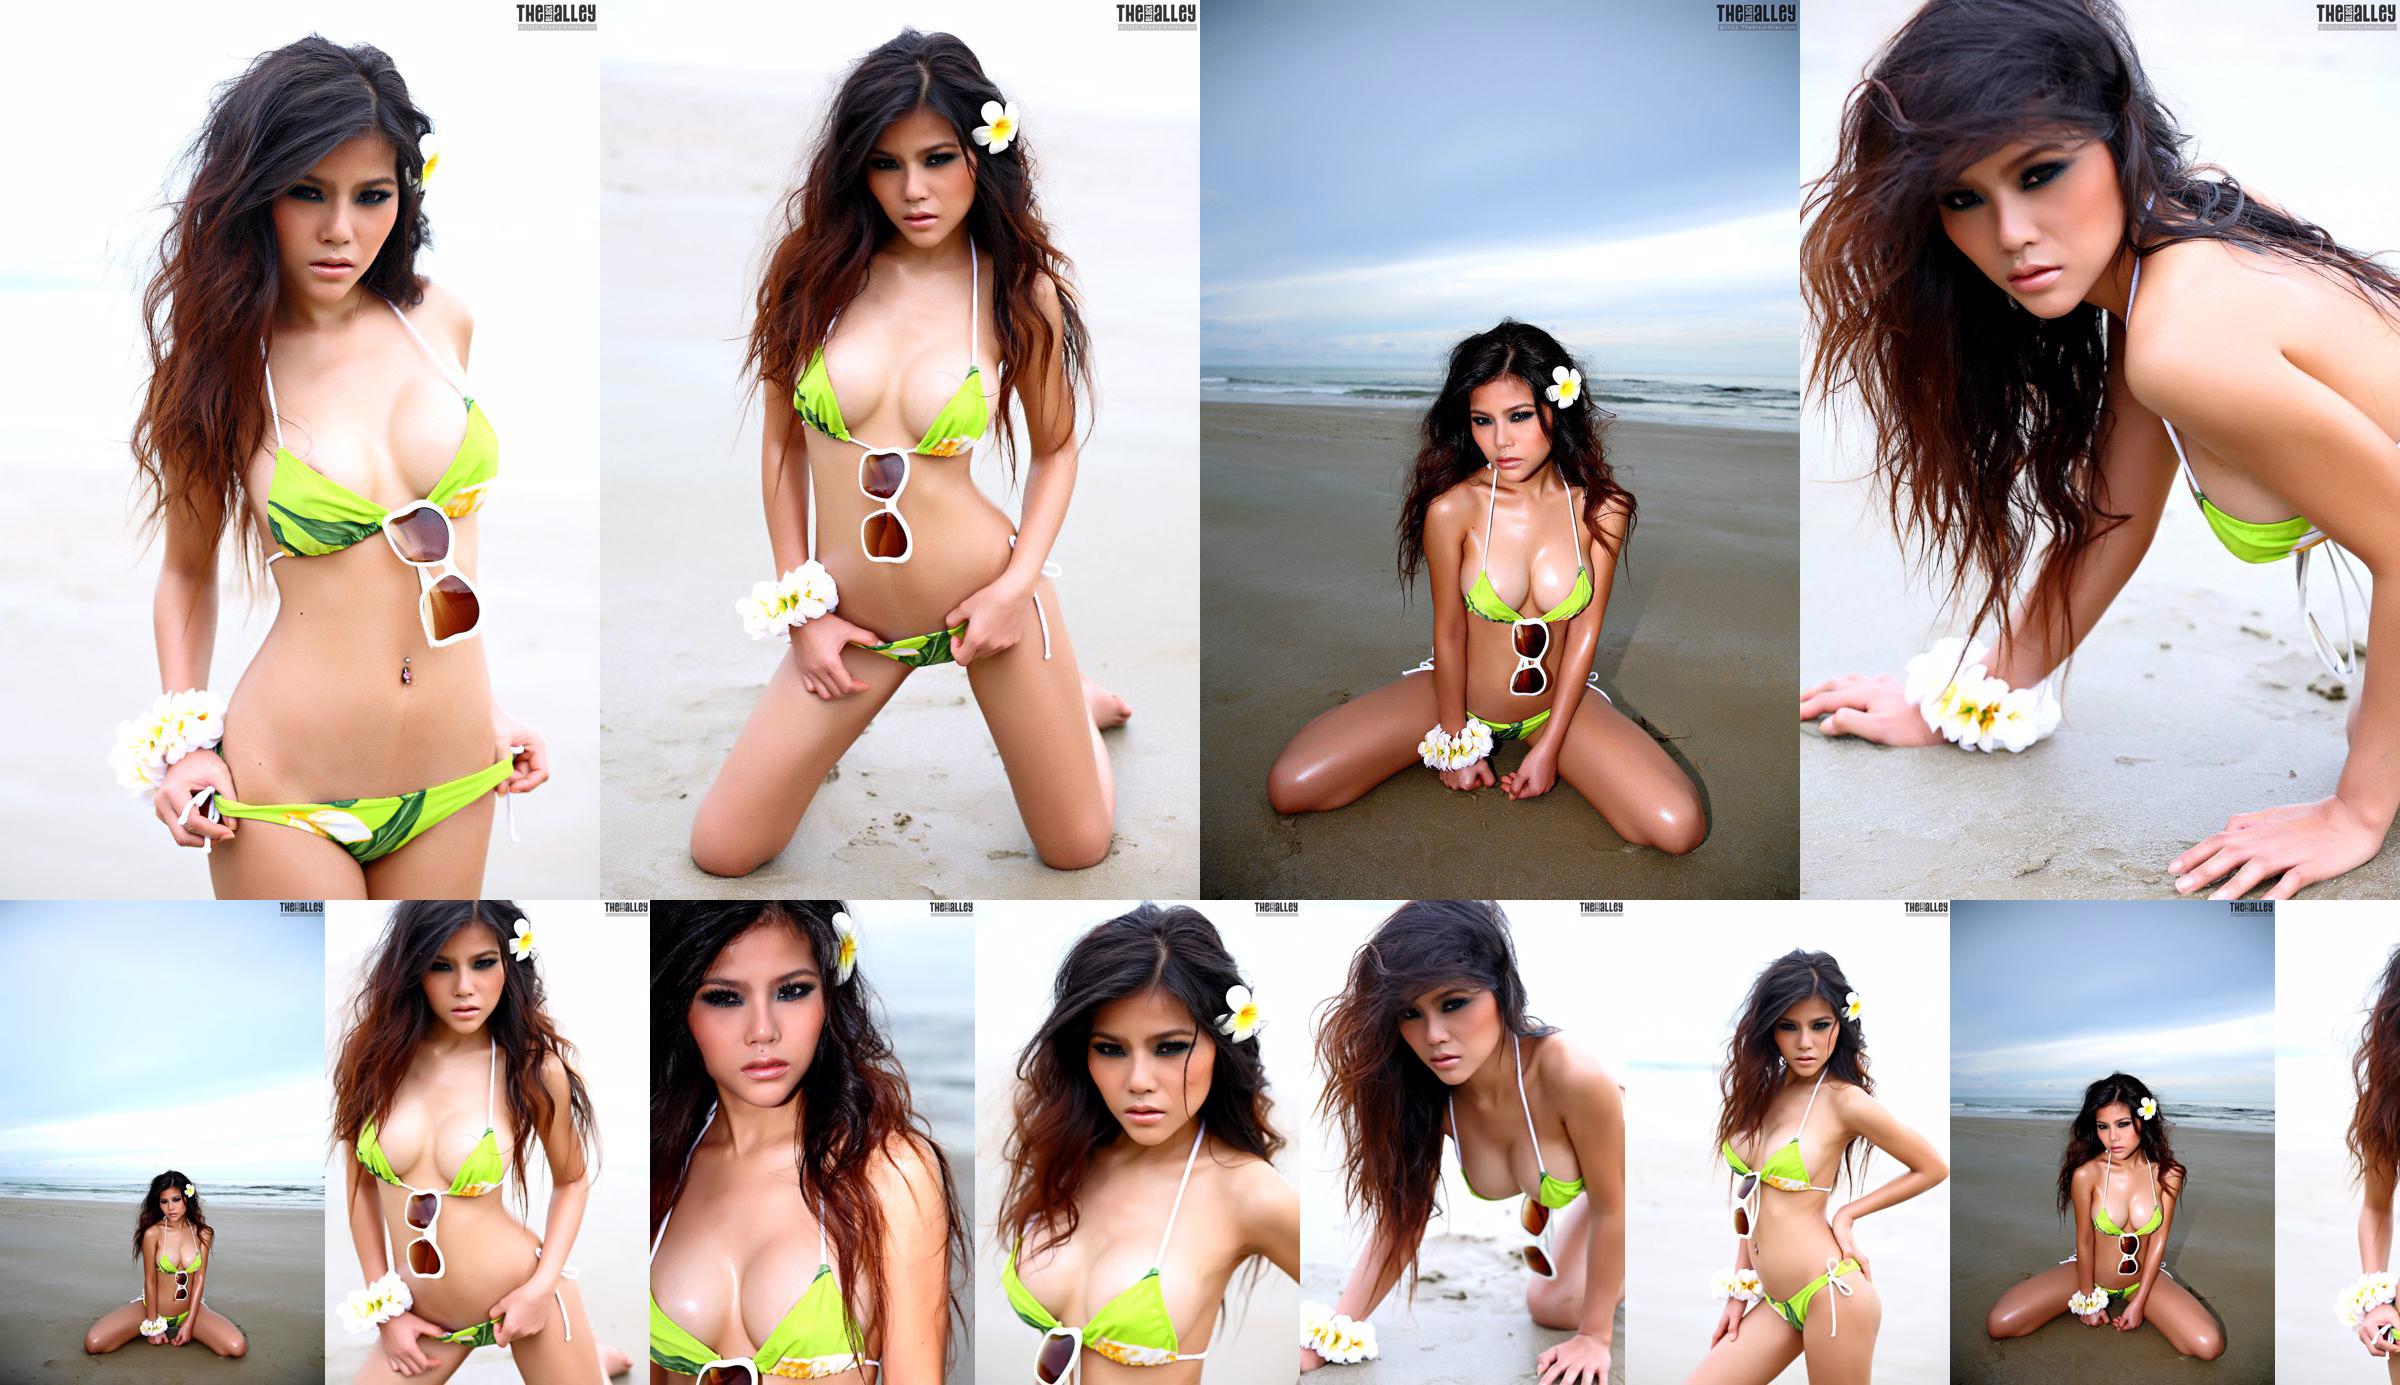 Juliana Young "Body Bikini trên bãi biển" [TBA / Black Lane] No.e492cf Trang 1